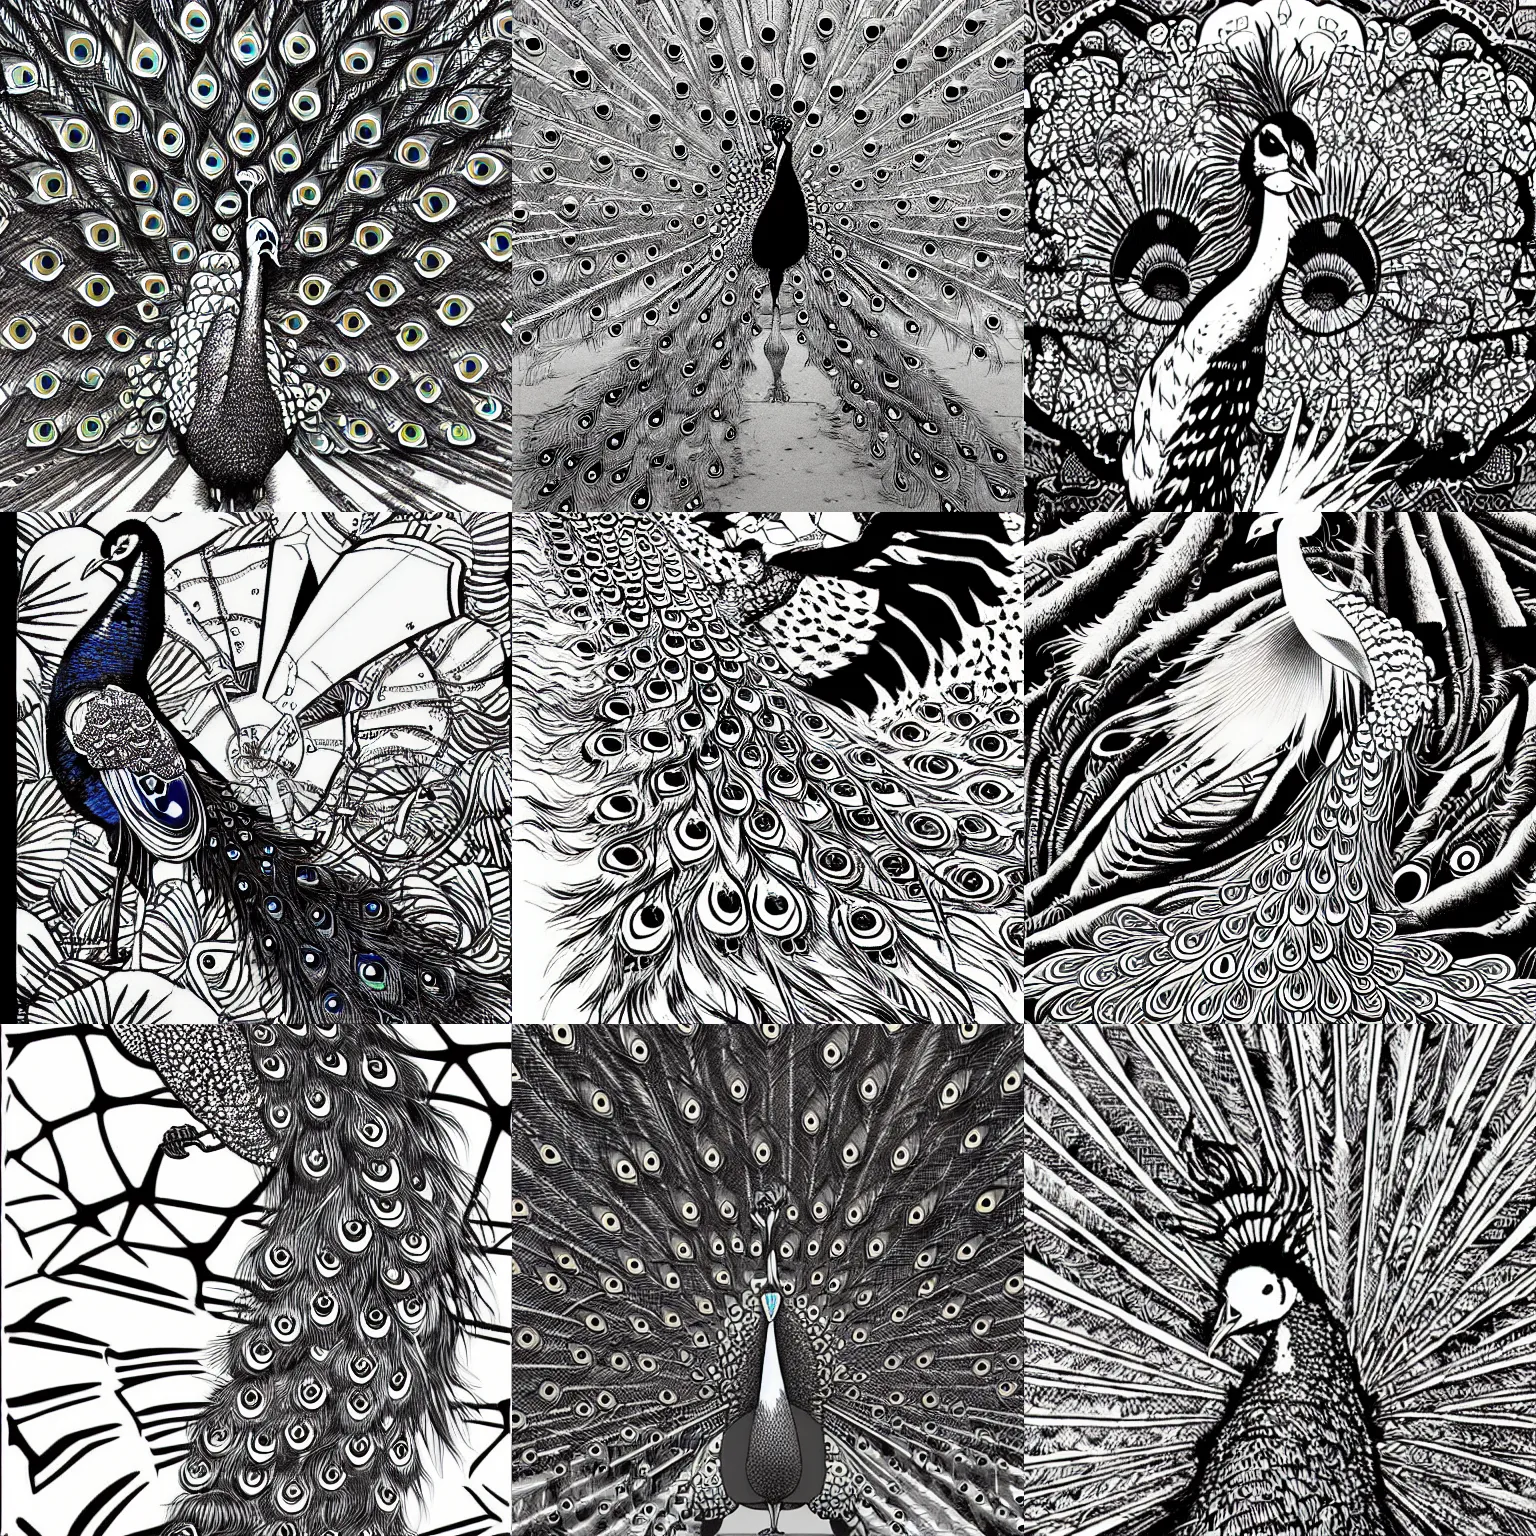 Prompt: peacock in the desert, katsuhiro otomo, shohei otomo, anime, highly detailed, black and white illustration, akira style, realistic shaded